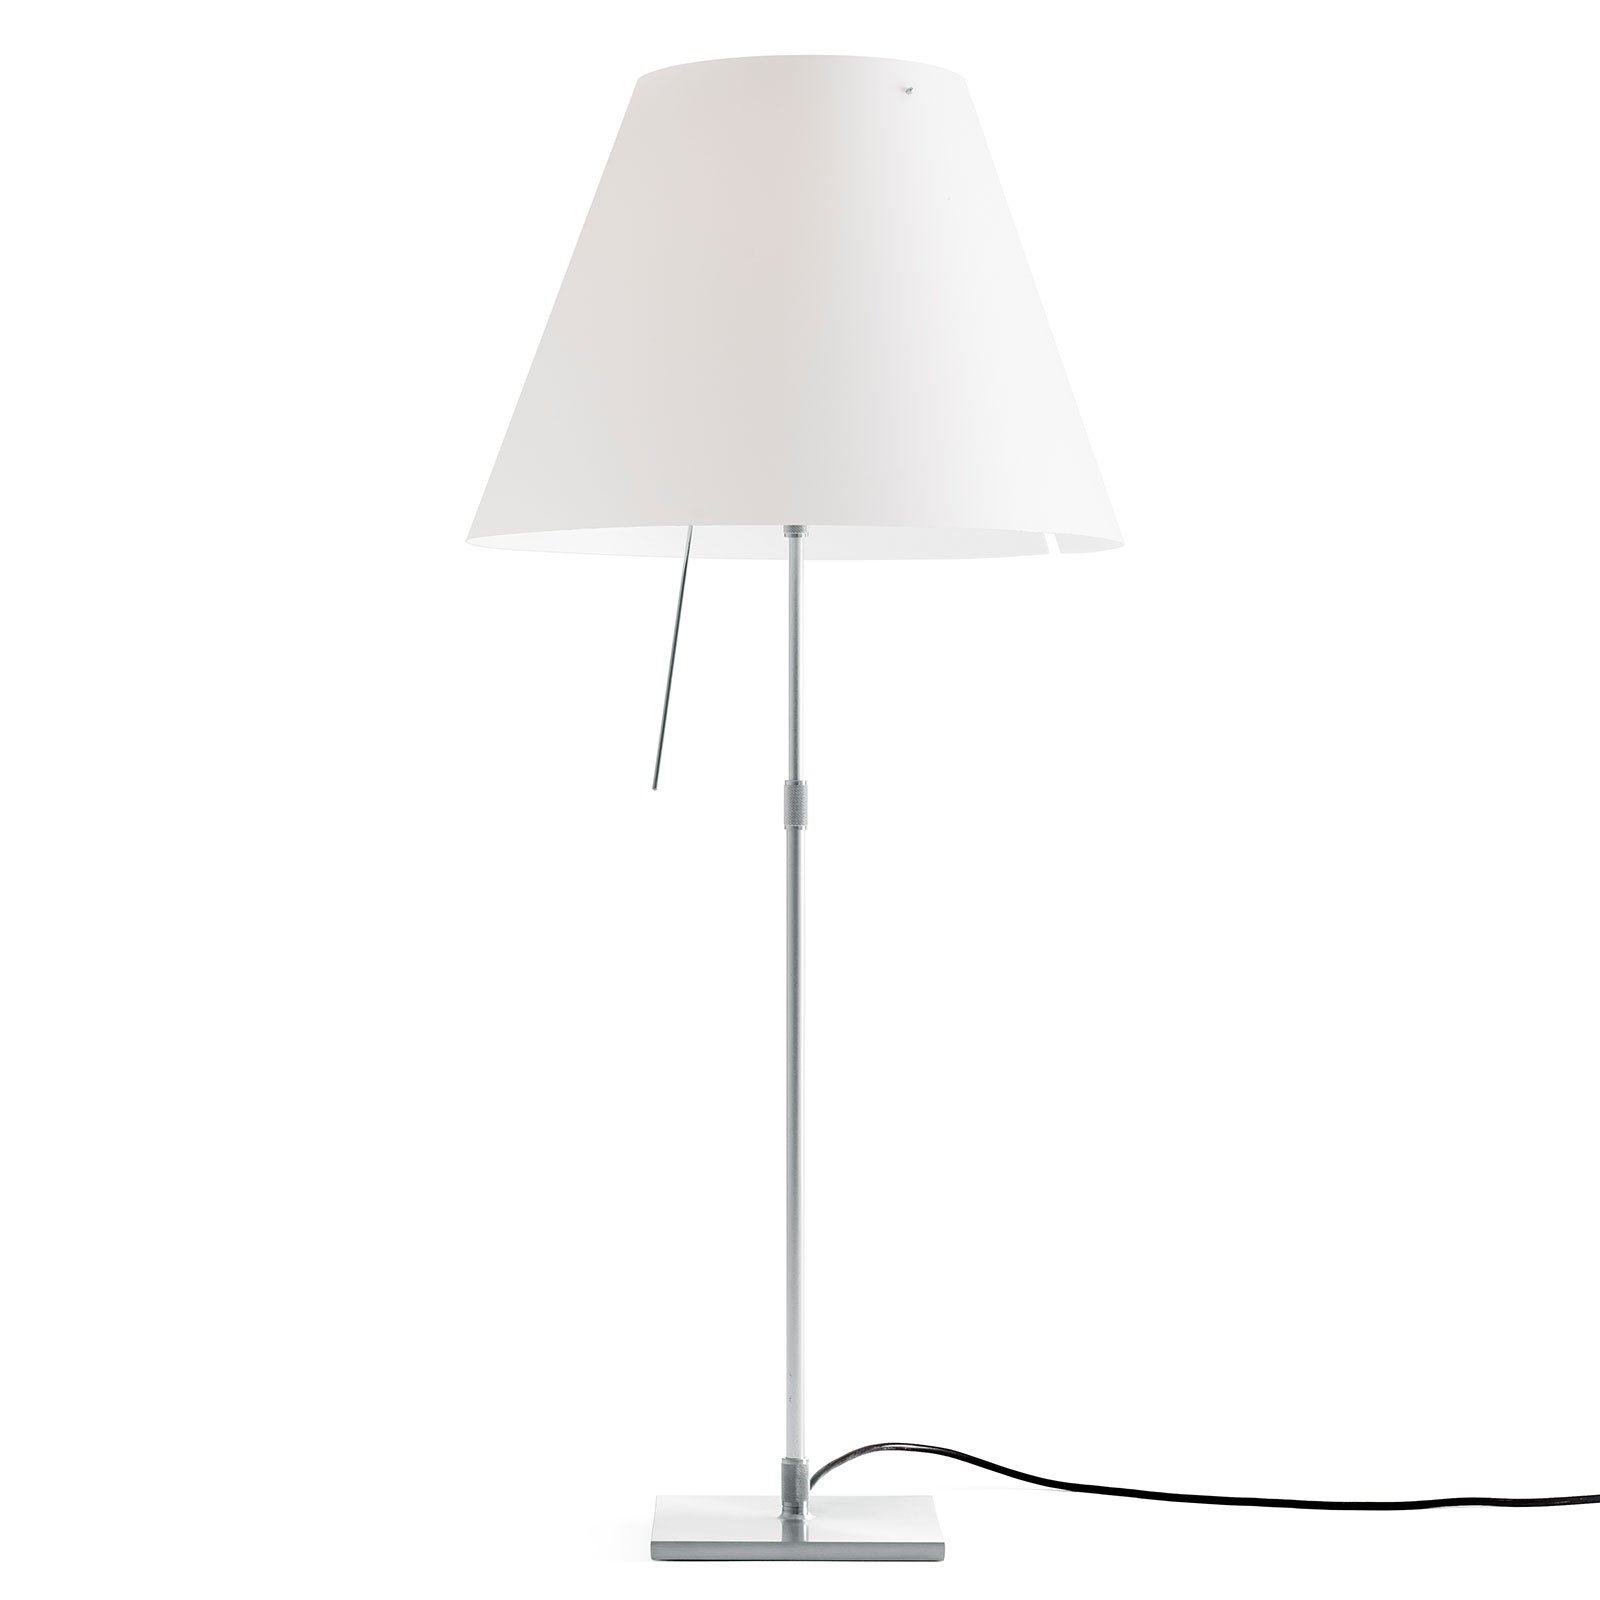 "Luceplan Costanza" stalinė lempa, aliuminis, balta, su difuzoriumi